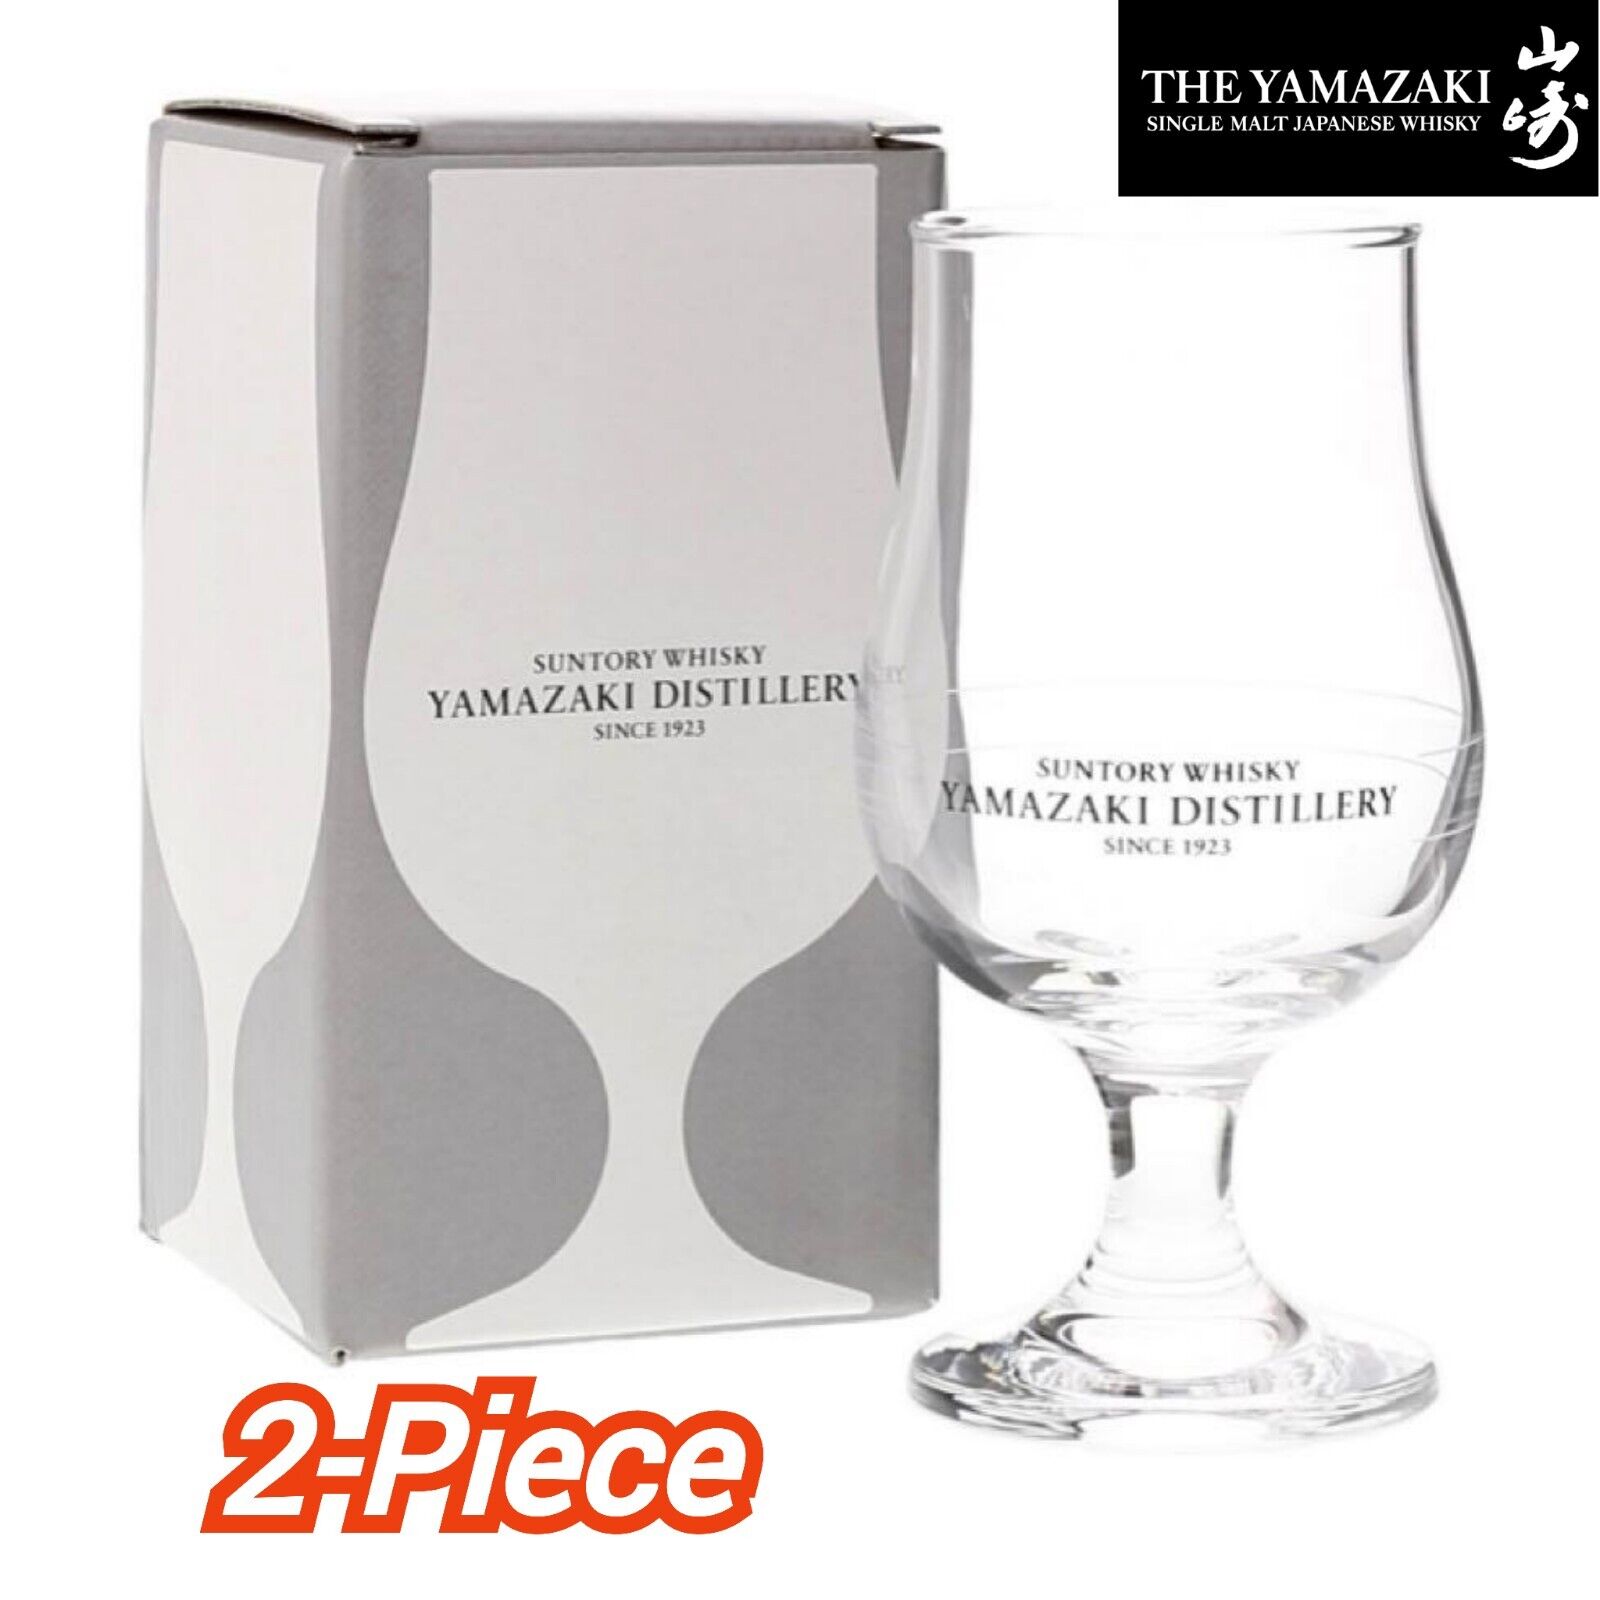 Suntory Whisky Tasting Glass of The Yamazaki Distillery Exclusive / 2-piece